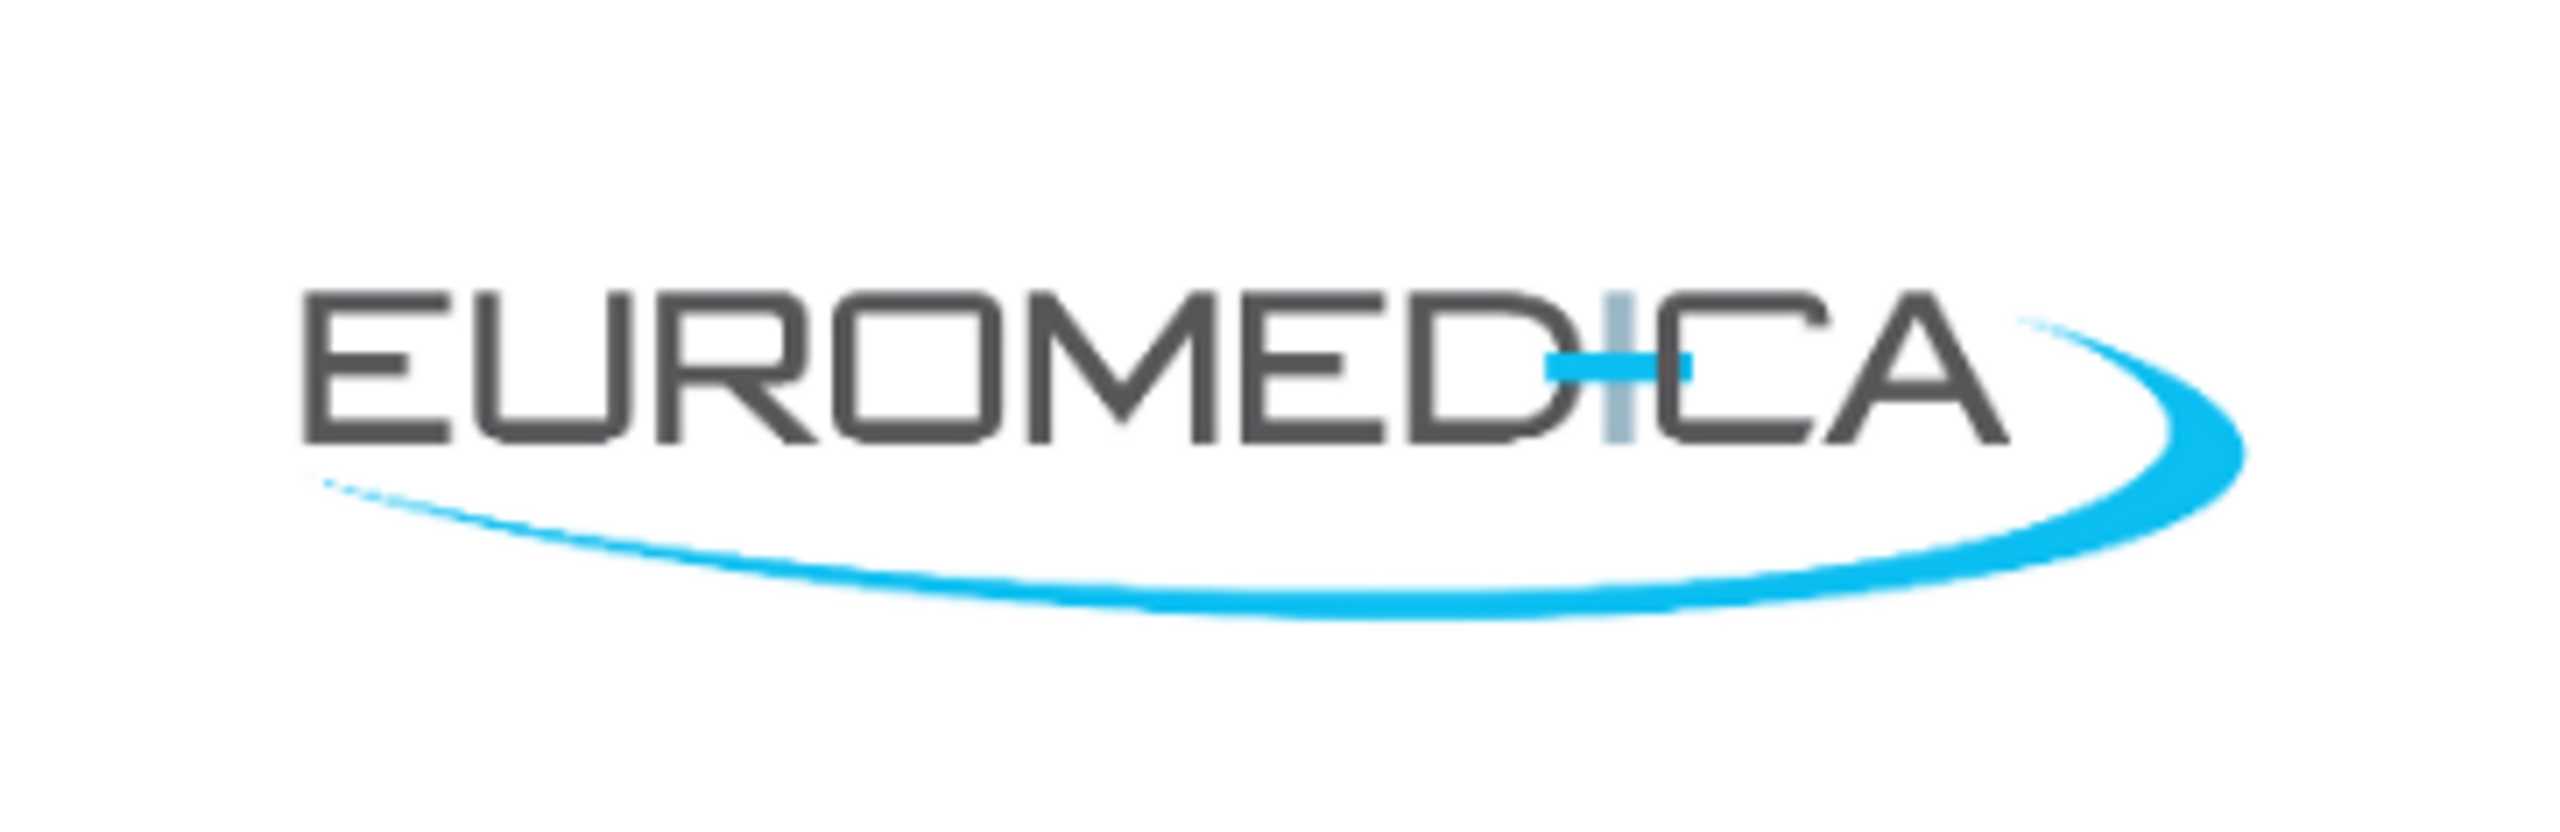 Euromedica: Καταθέτει επιχειρησιακό σχέδιο για την διάσωση και ανάπτυξη της εταιρείας